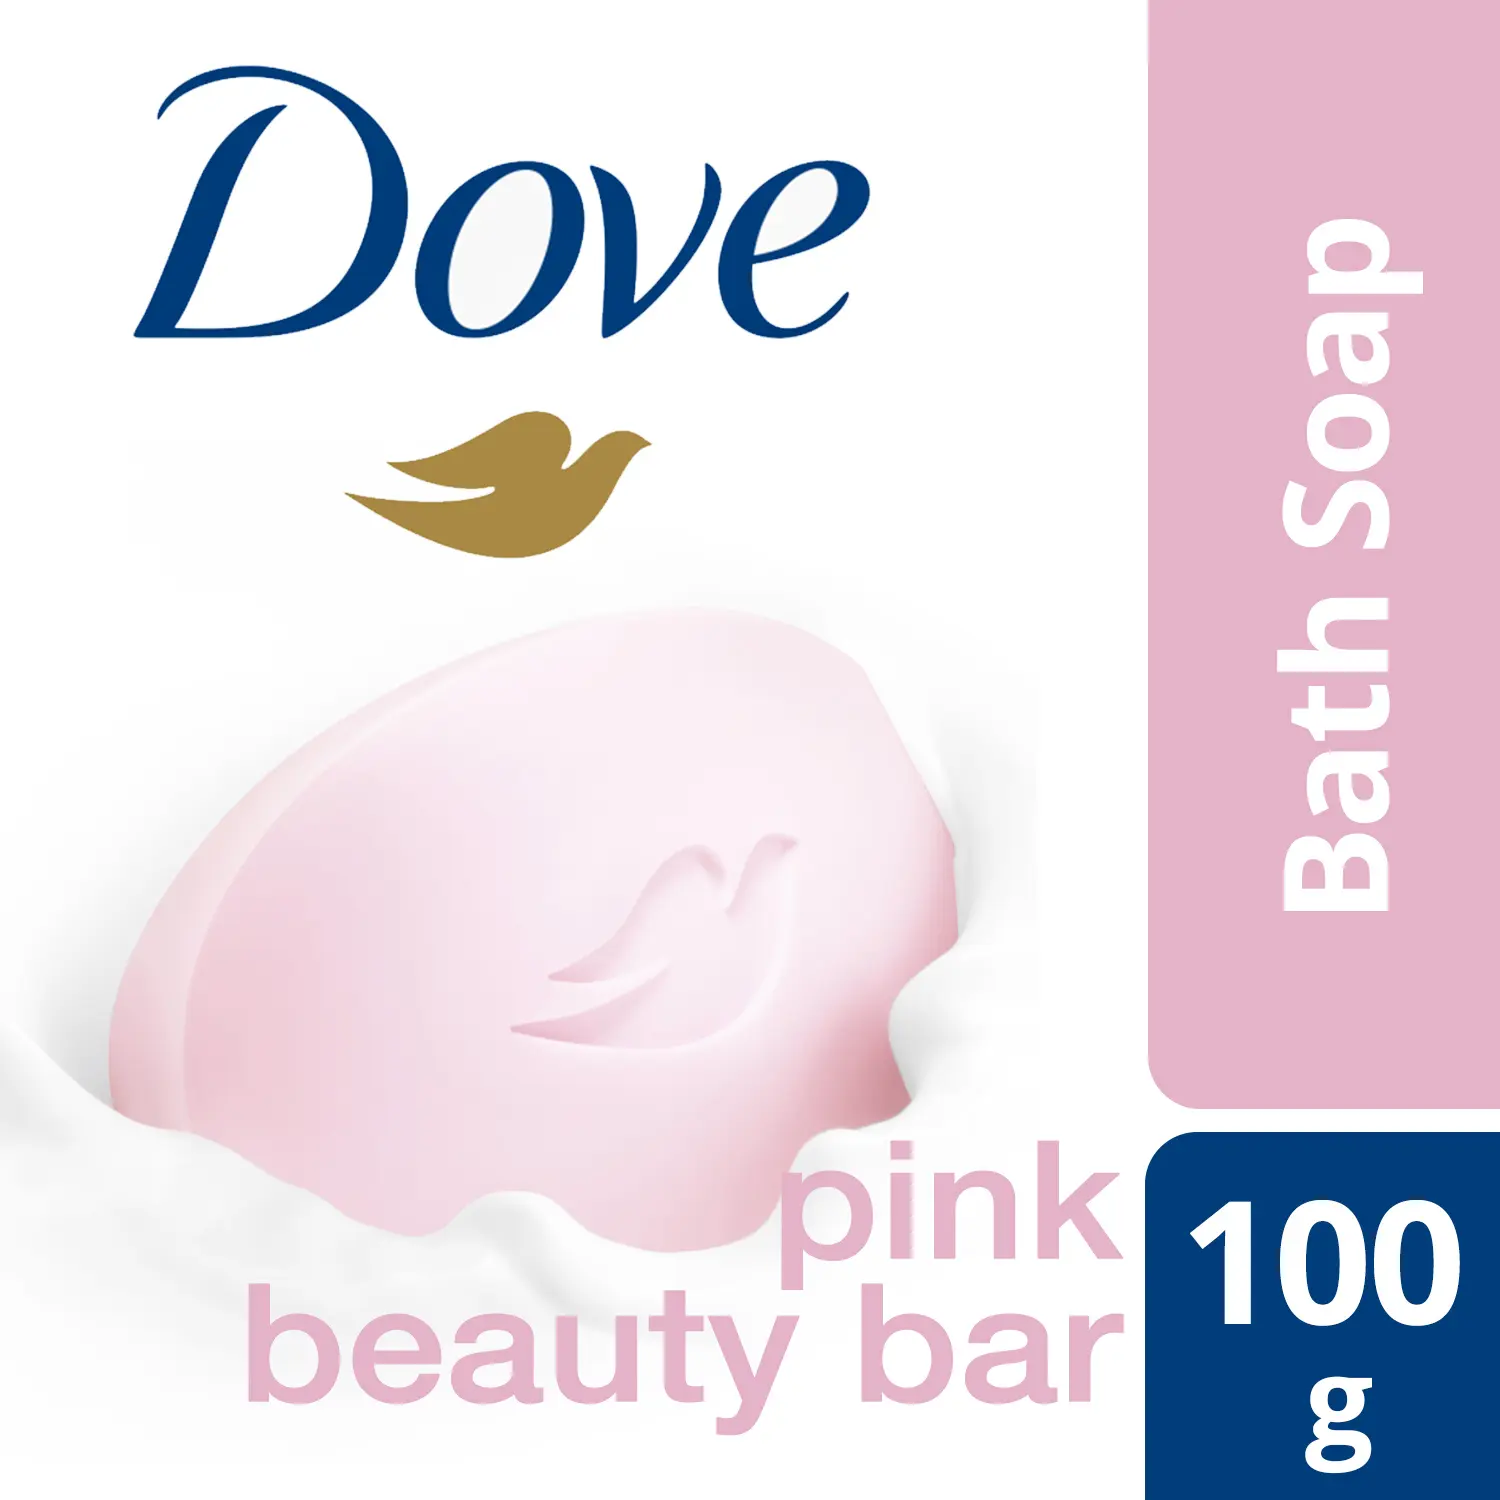 Dove Pink Bar 100g